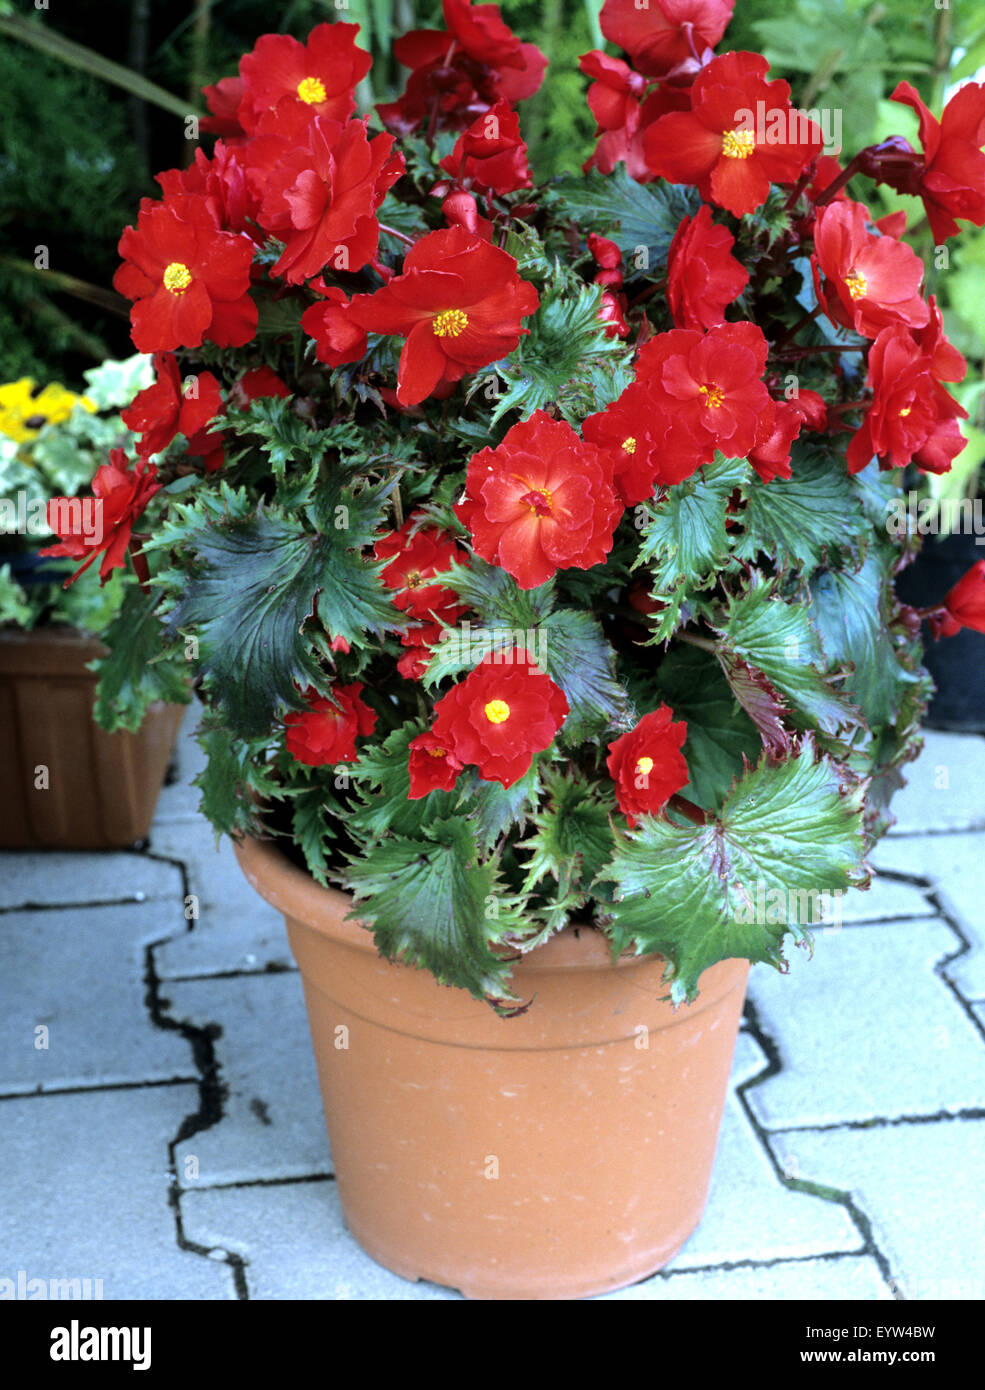 Knollenbegonie, Begonia, Balkonblumen Stock Photo